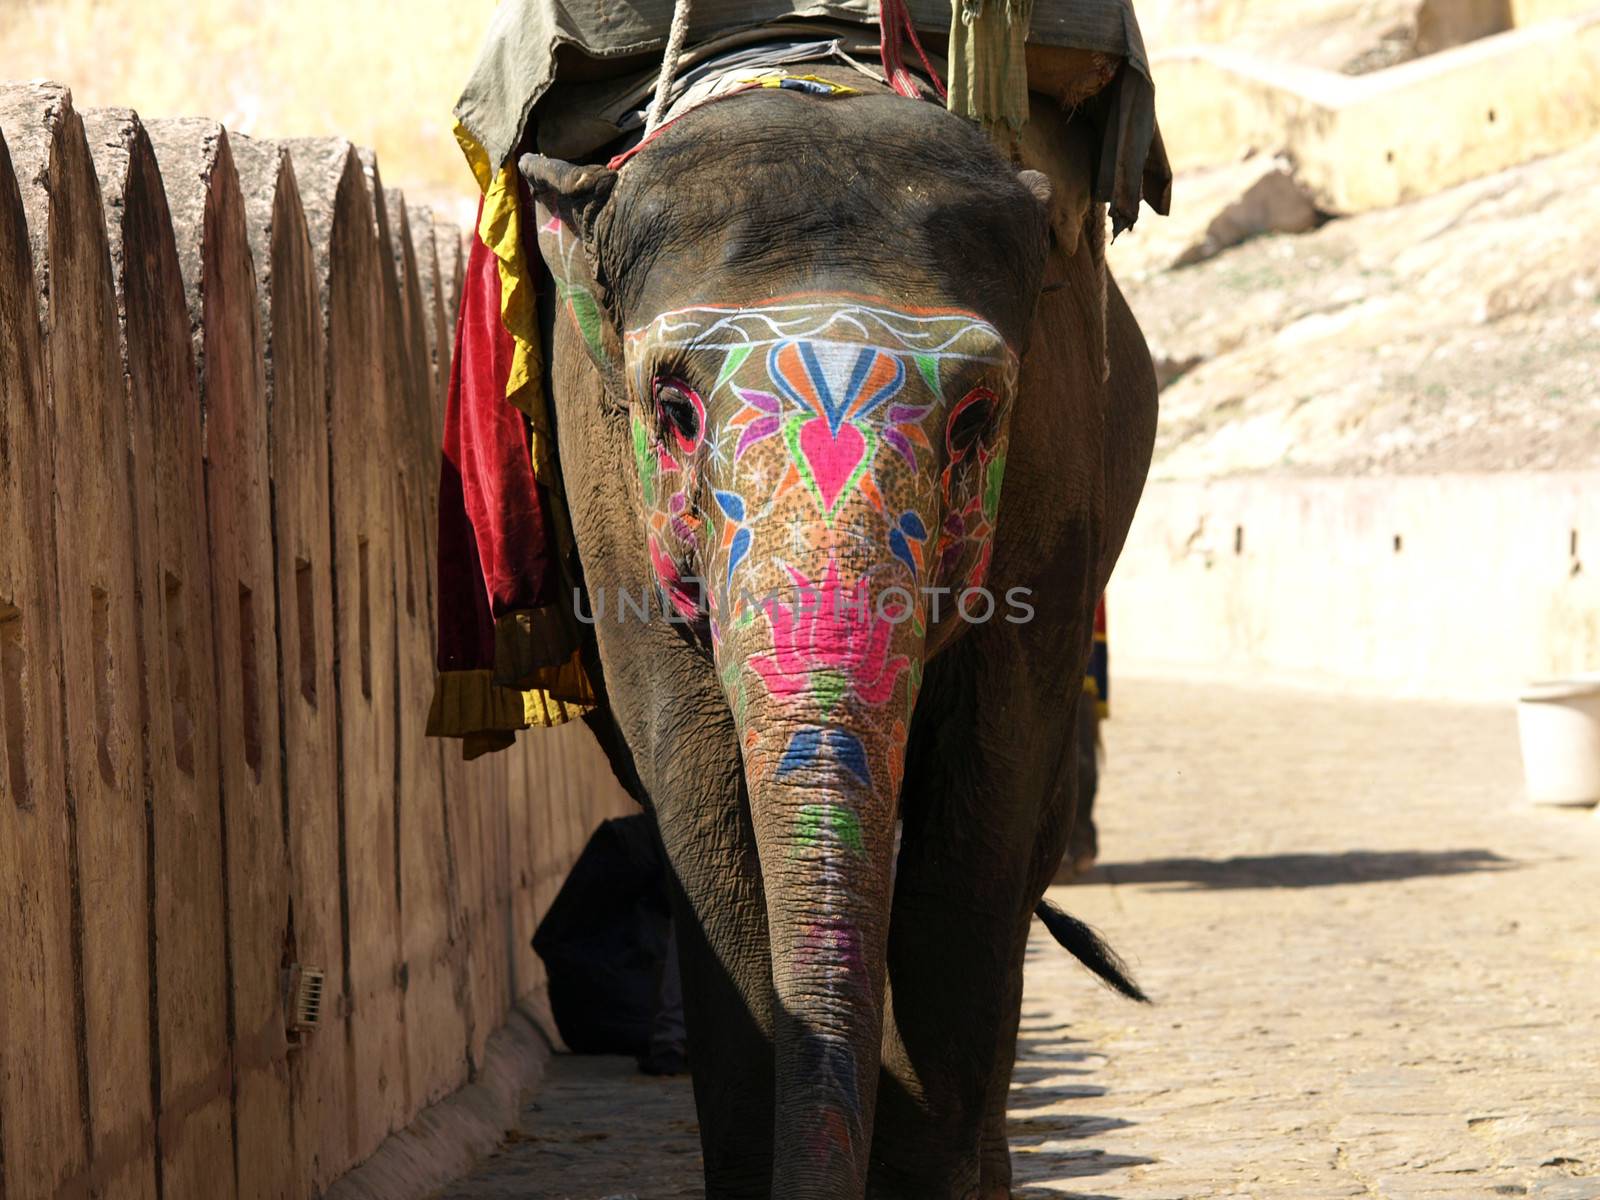 painted elephant in Jaipur,India      